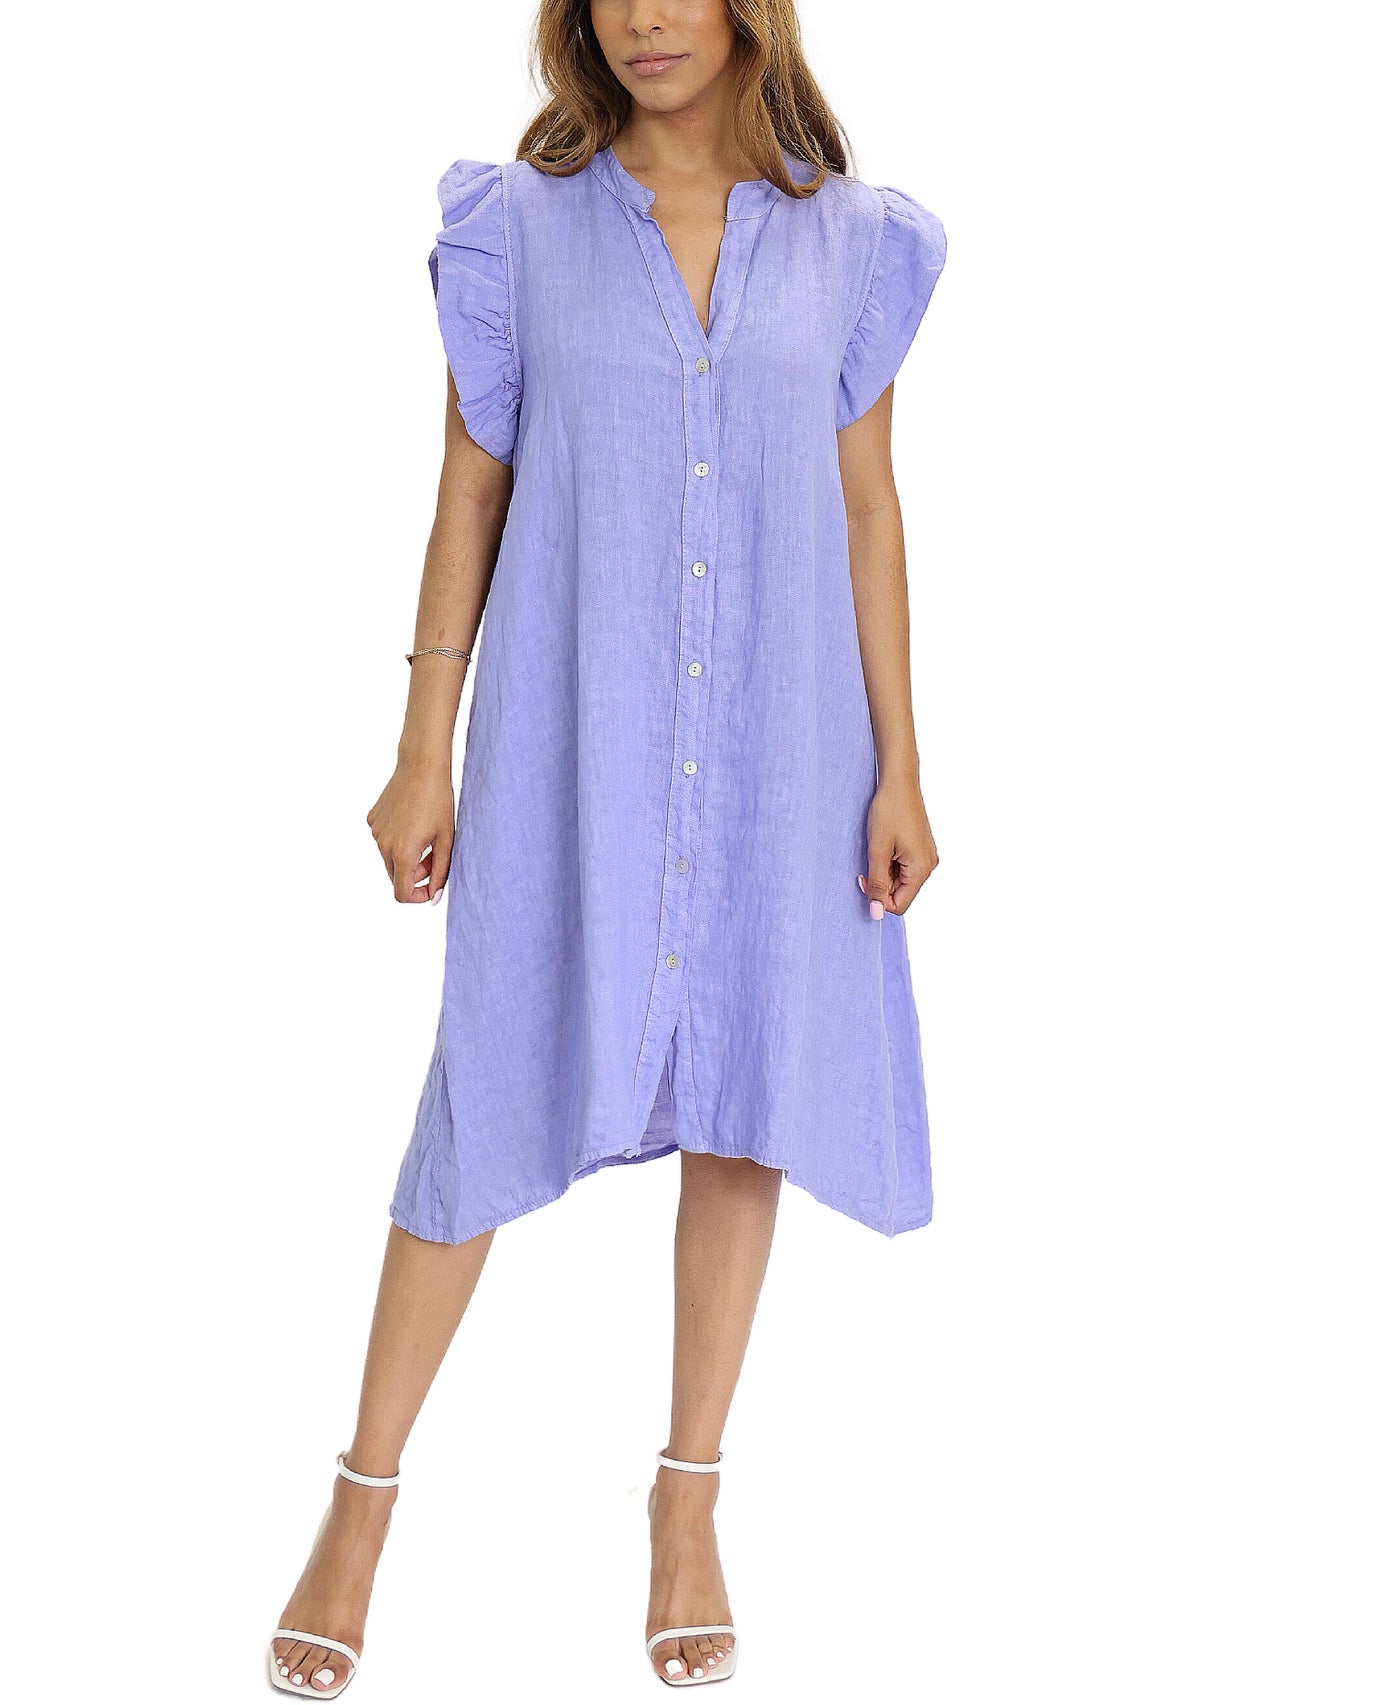 Linen Shirt Dress w/ Ruffle Sleeves image 1